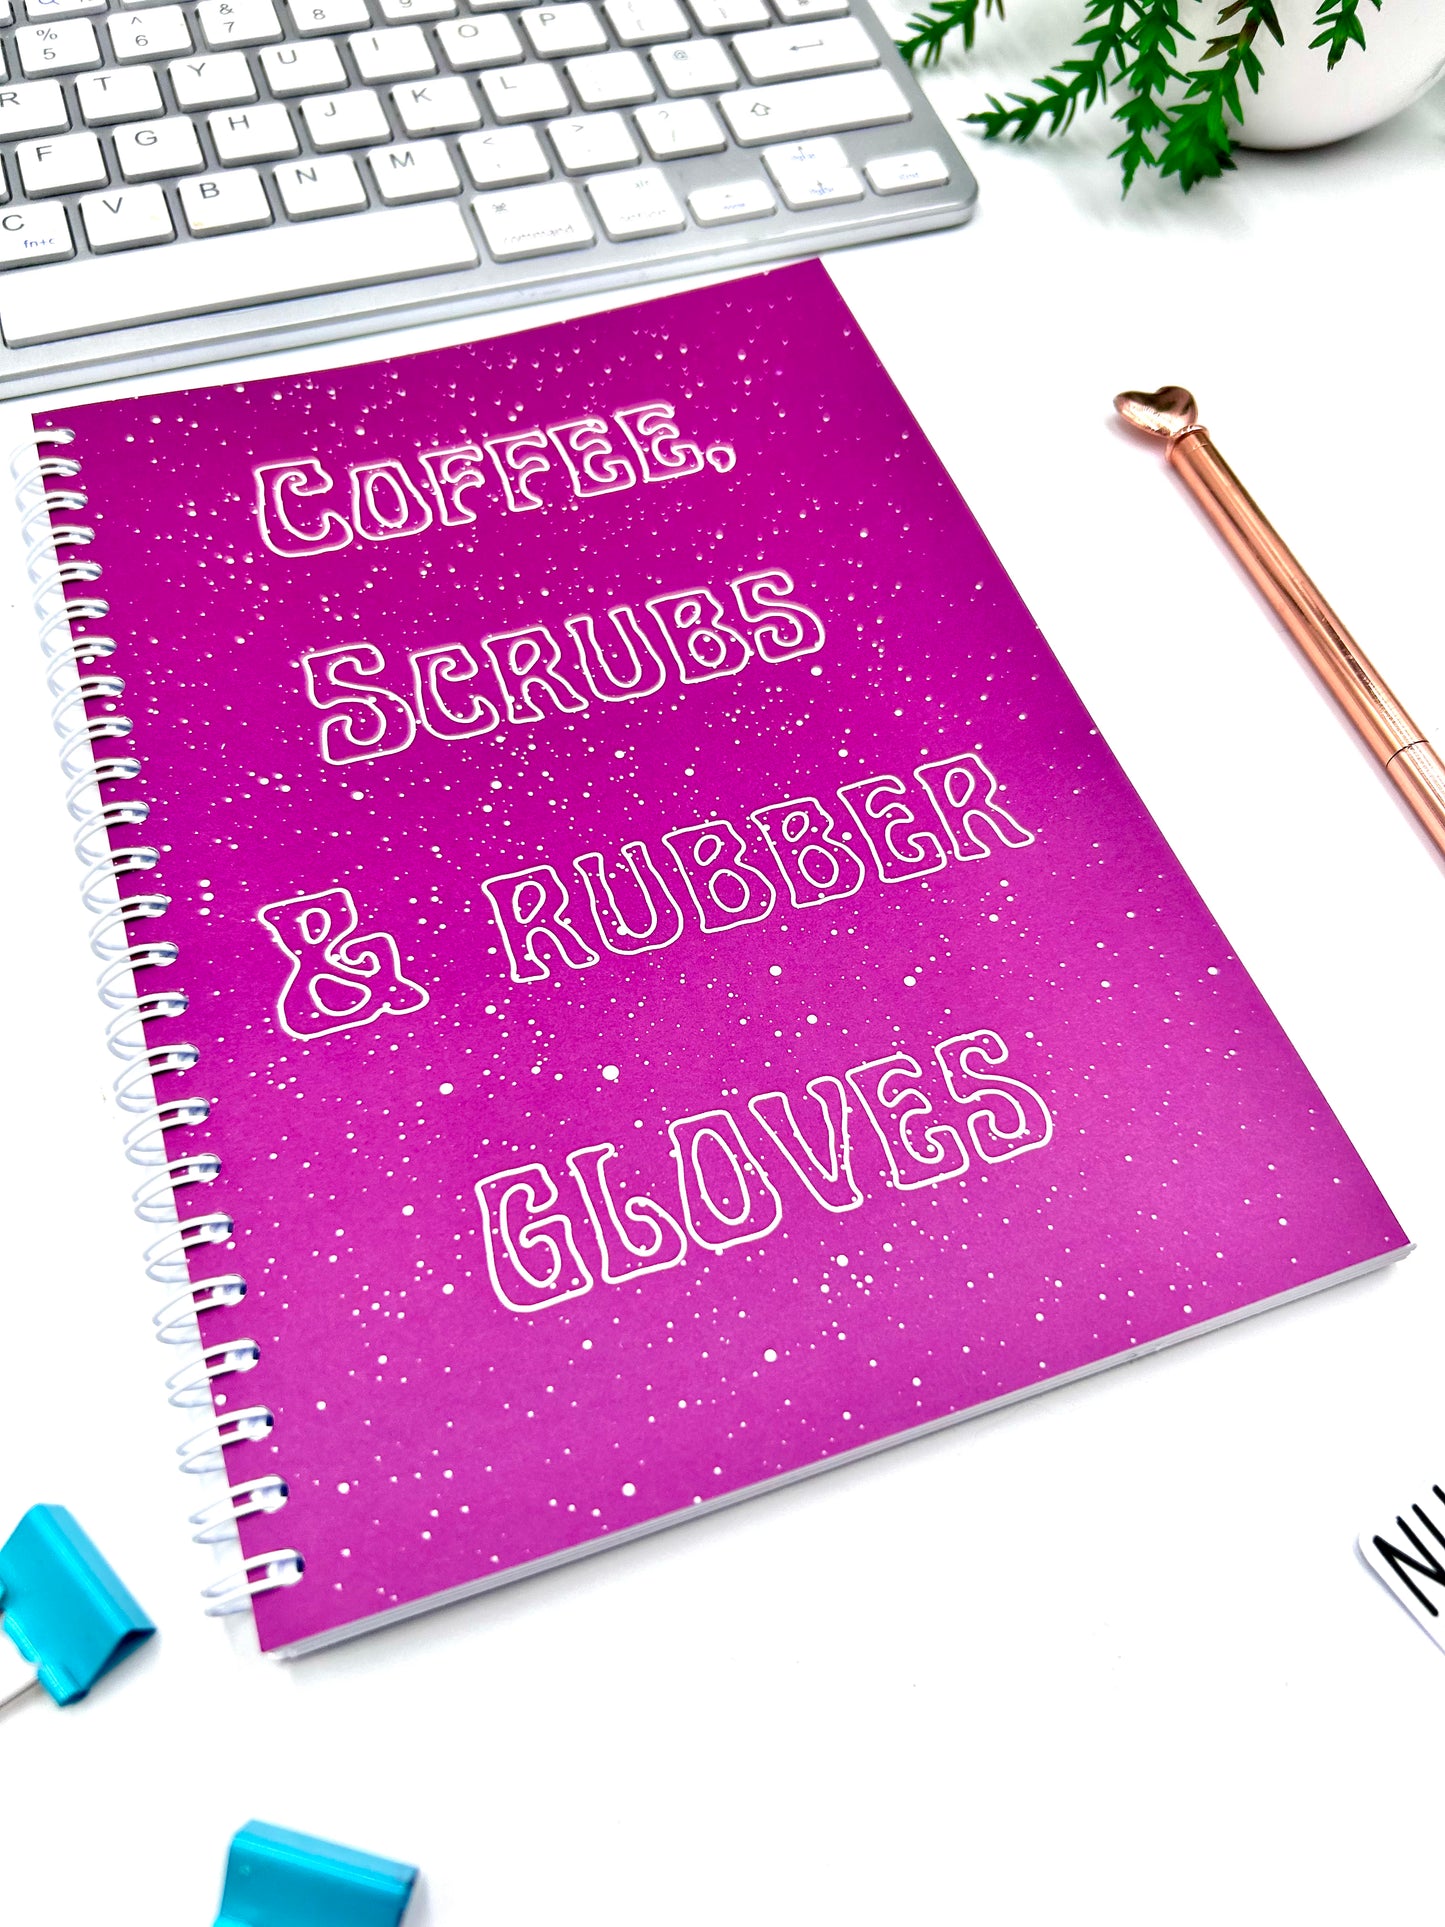 Coffee, scrubs & rubber gloves Notebook